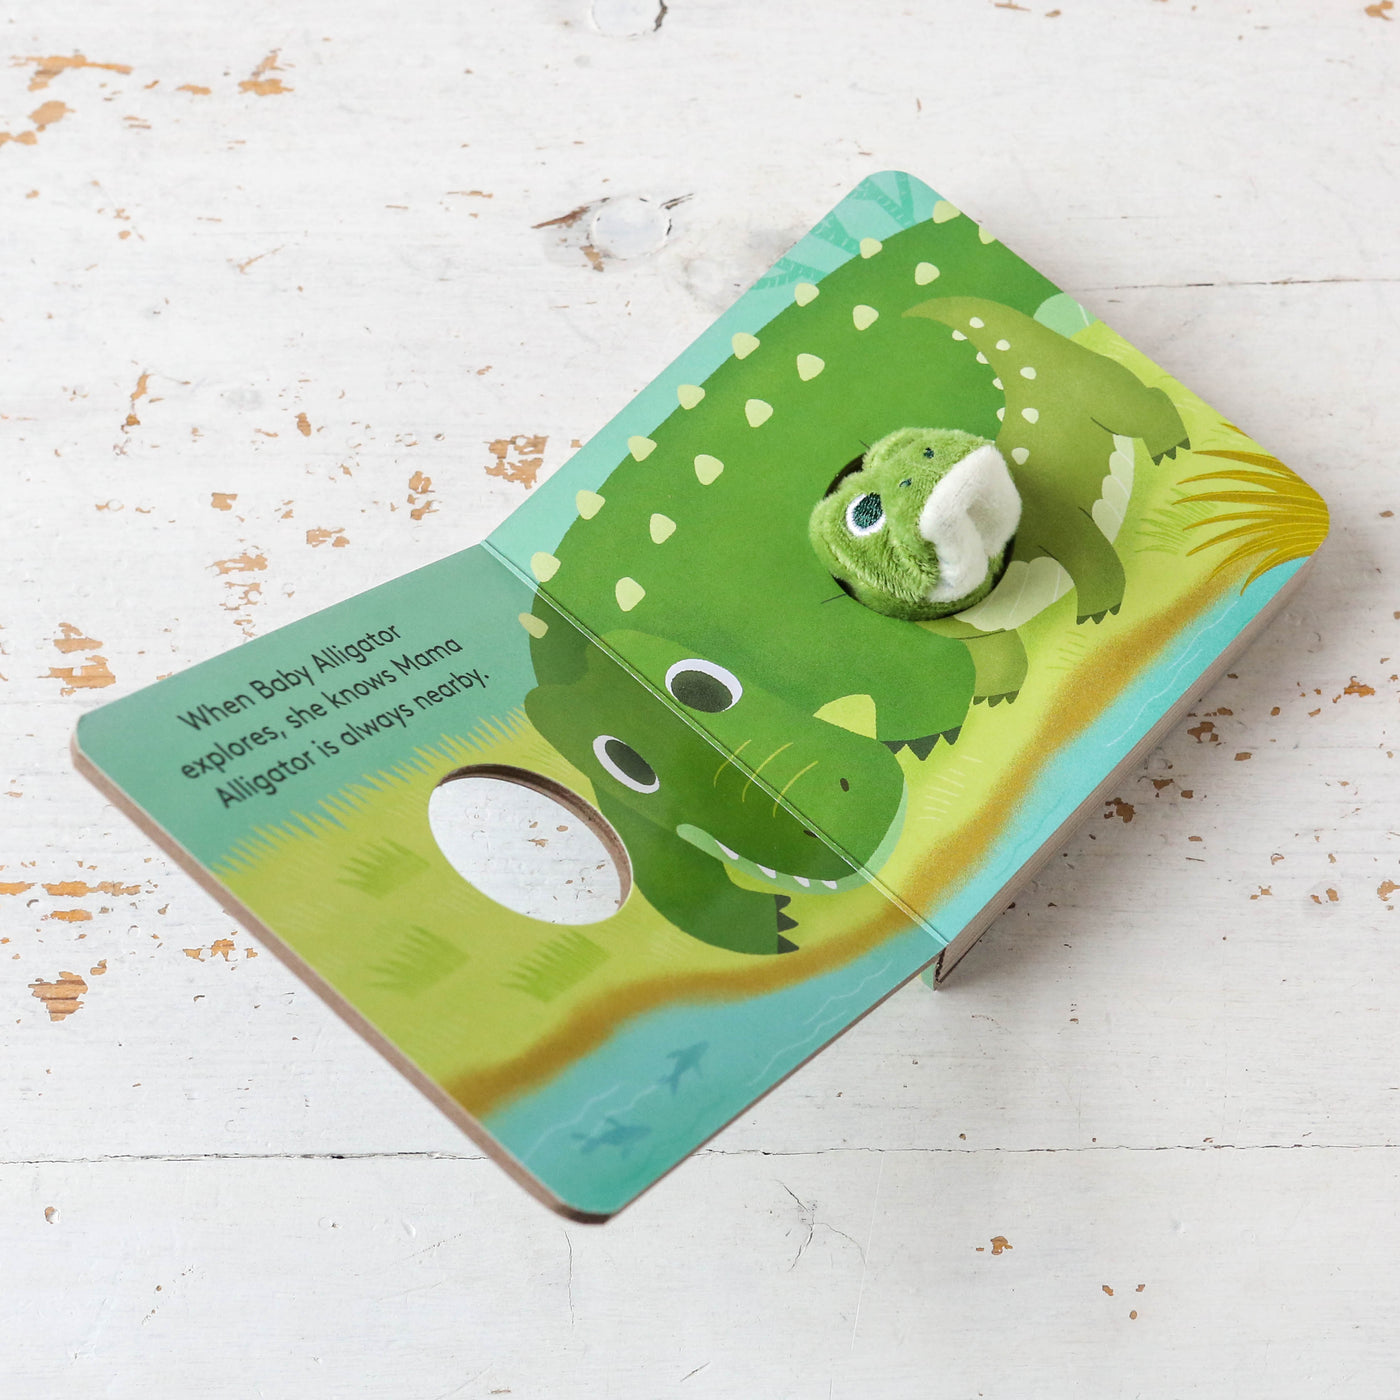 Finger Puppet Board Book - Baby Alligator